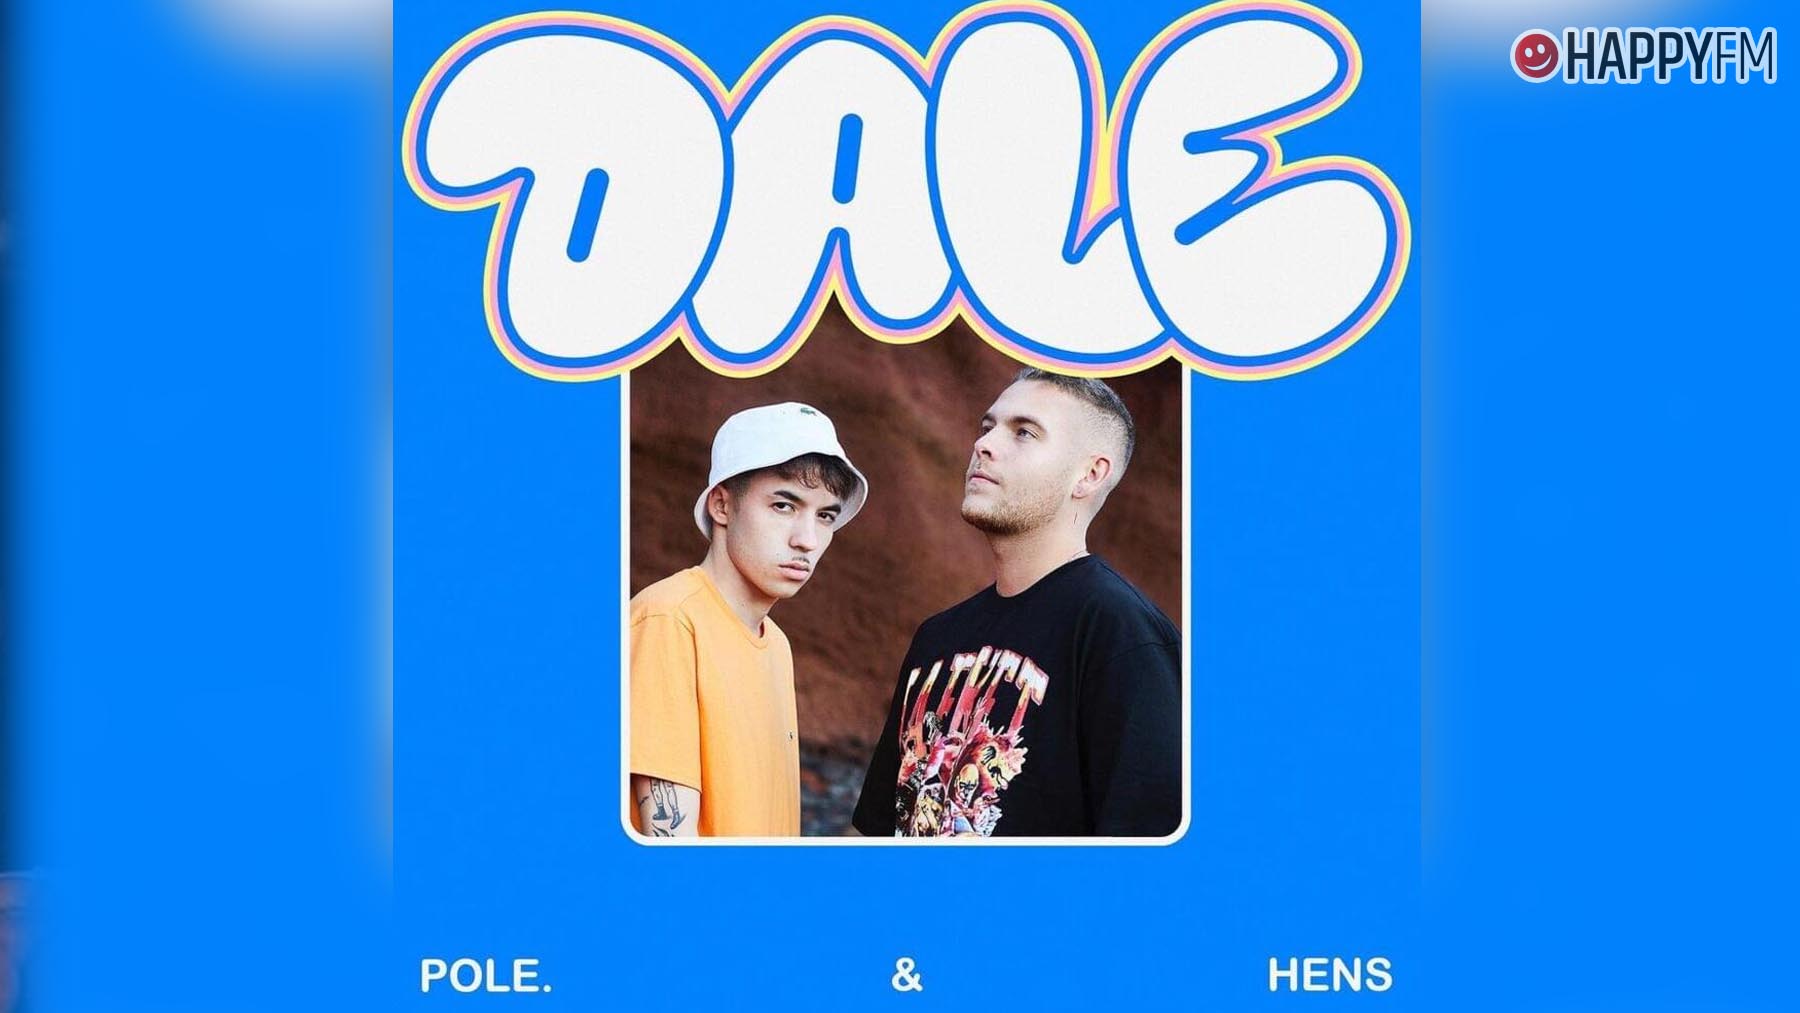 Pole y Hens ‘Dale’.